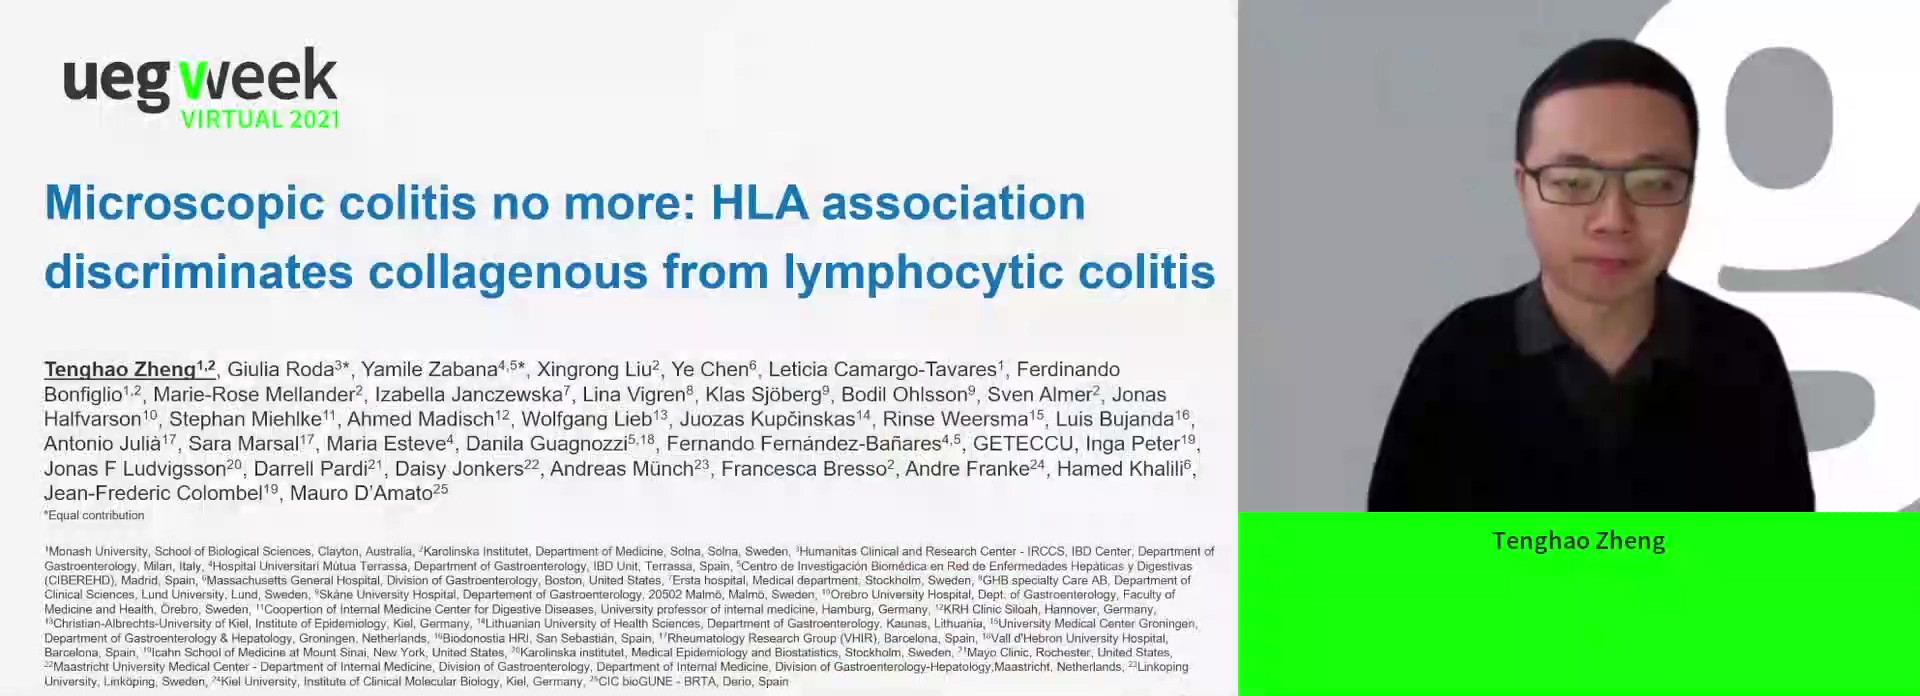 MICROSCOPIC COLITIS NO MORE: HLA ASSOCIATION DISCRIMINATES COLLAGENOUS FROM LYMPHOCYTIC COLITIS